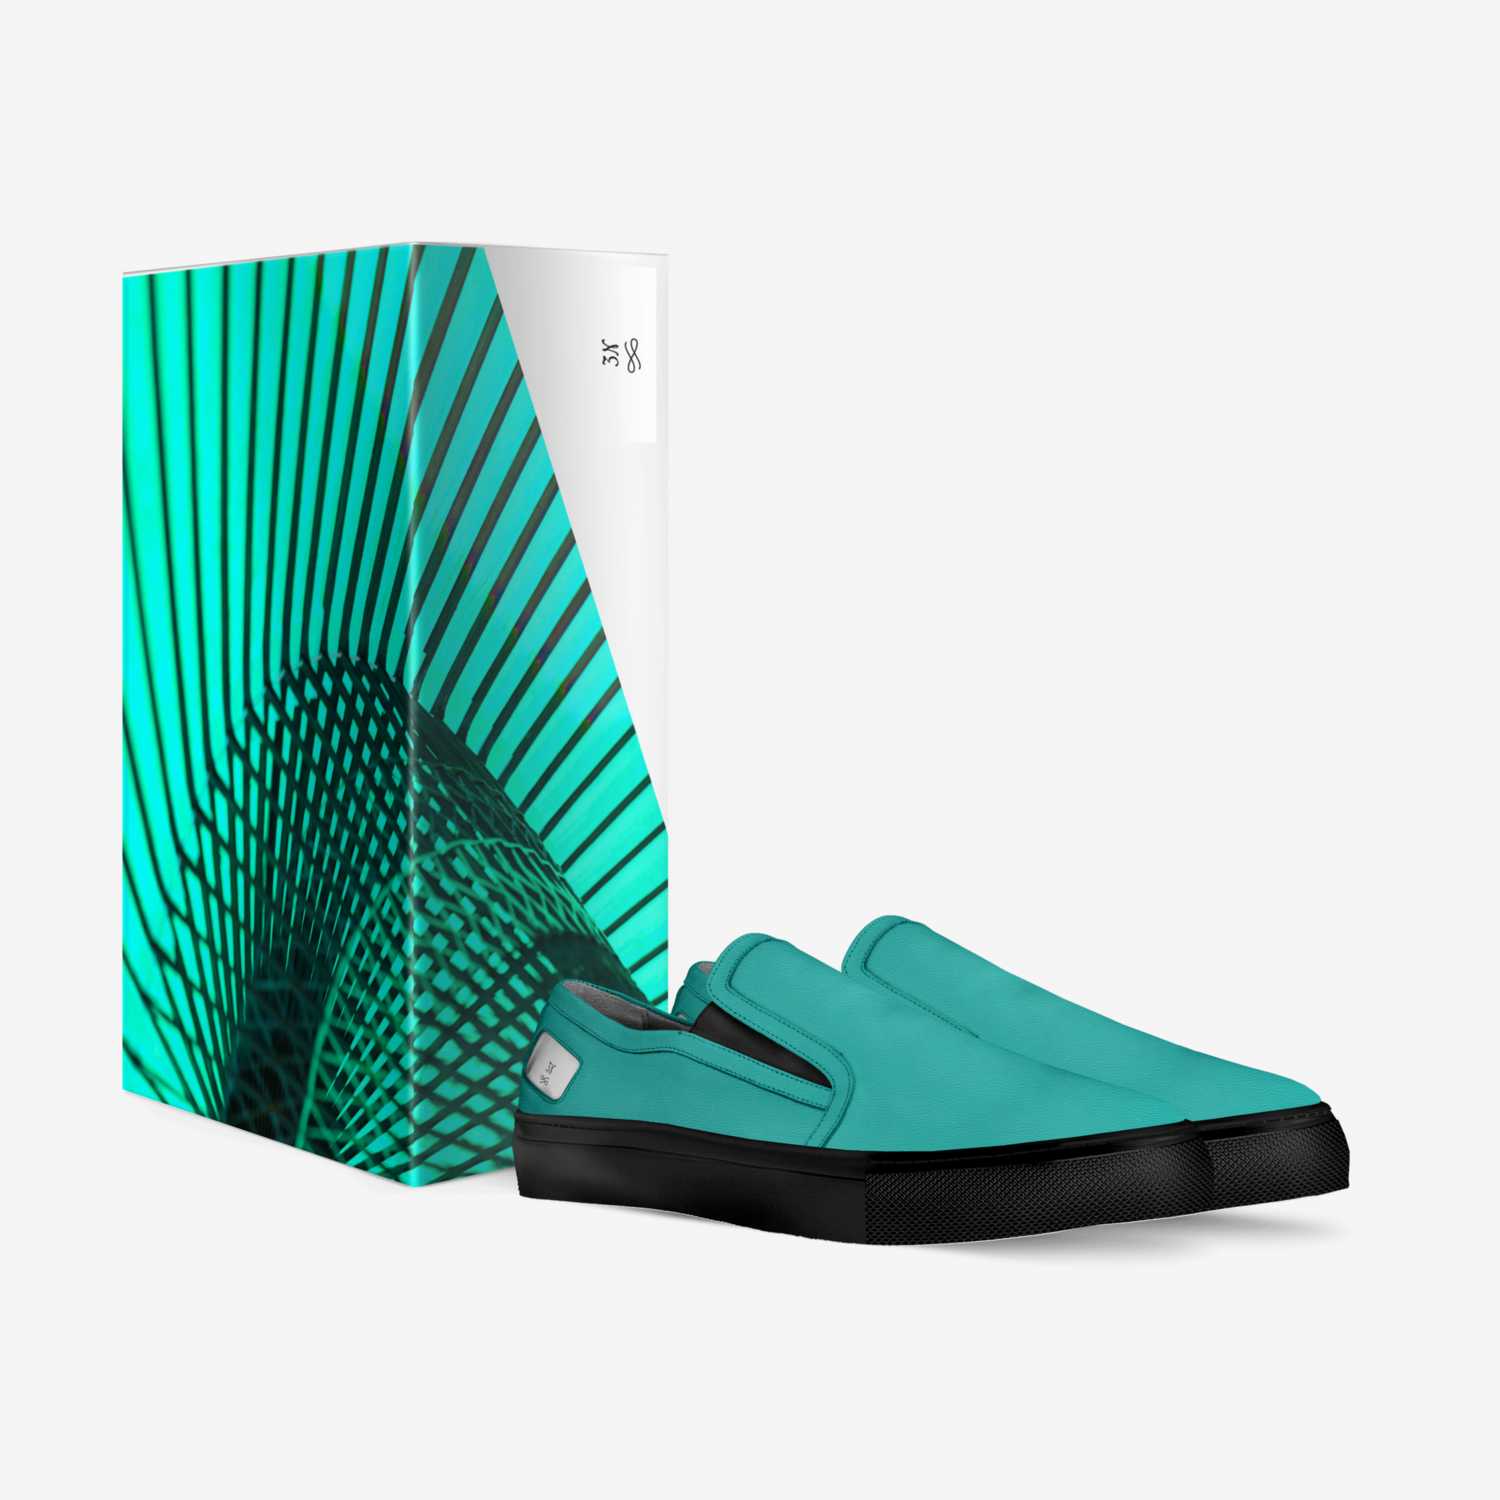 3N custom made in Italy shoes by Nieresta Nicholas | Box view